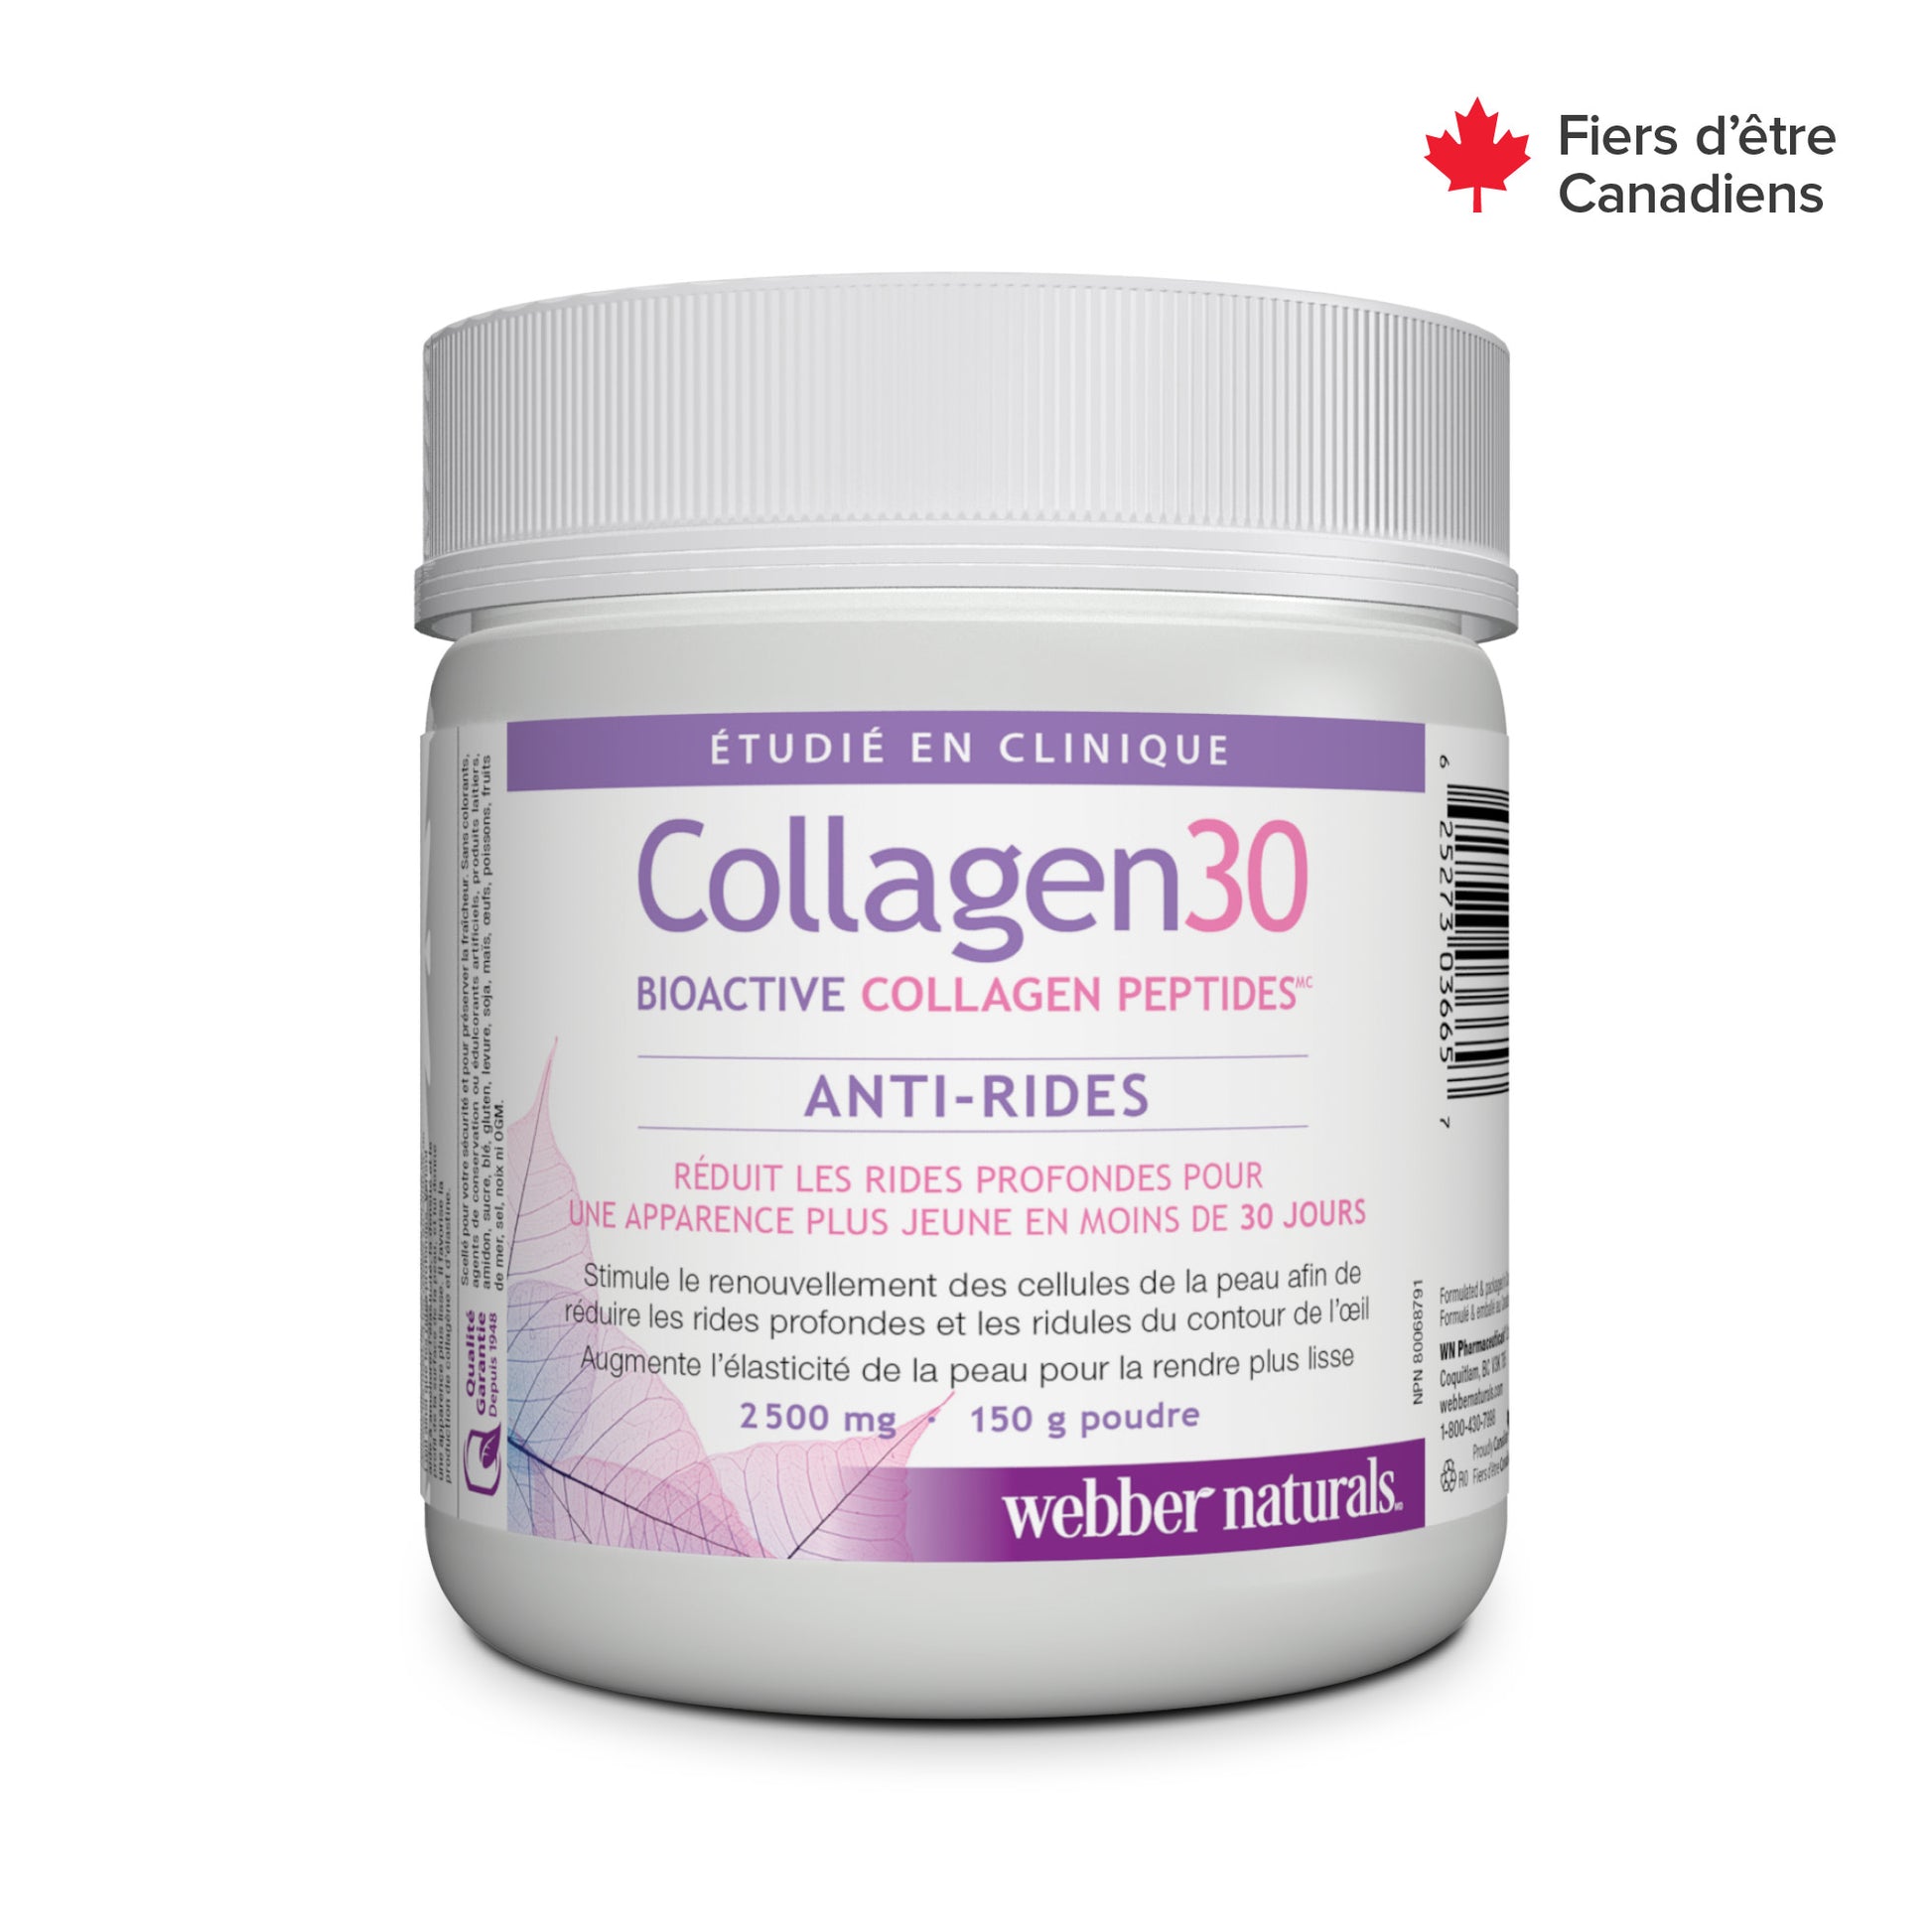 Collagen30 Anti-rides Bioactive Collagen Peptides 2 500 mg for Webber Naturals|v|hi-res|WN3665